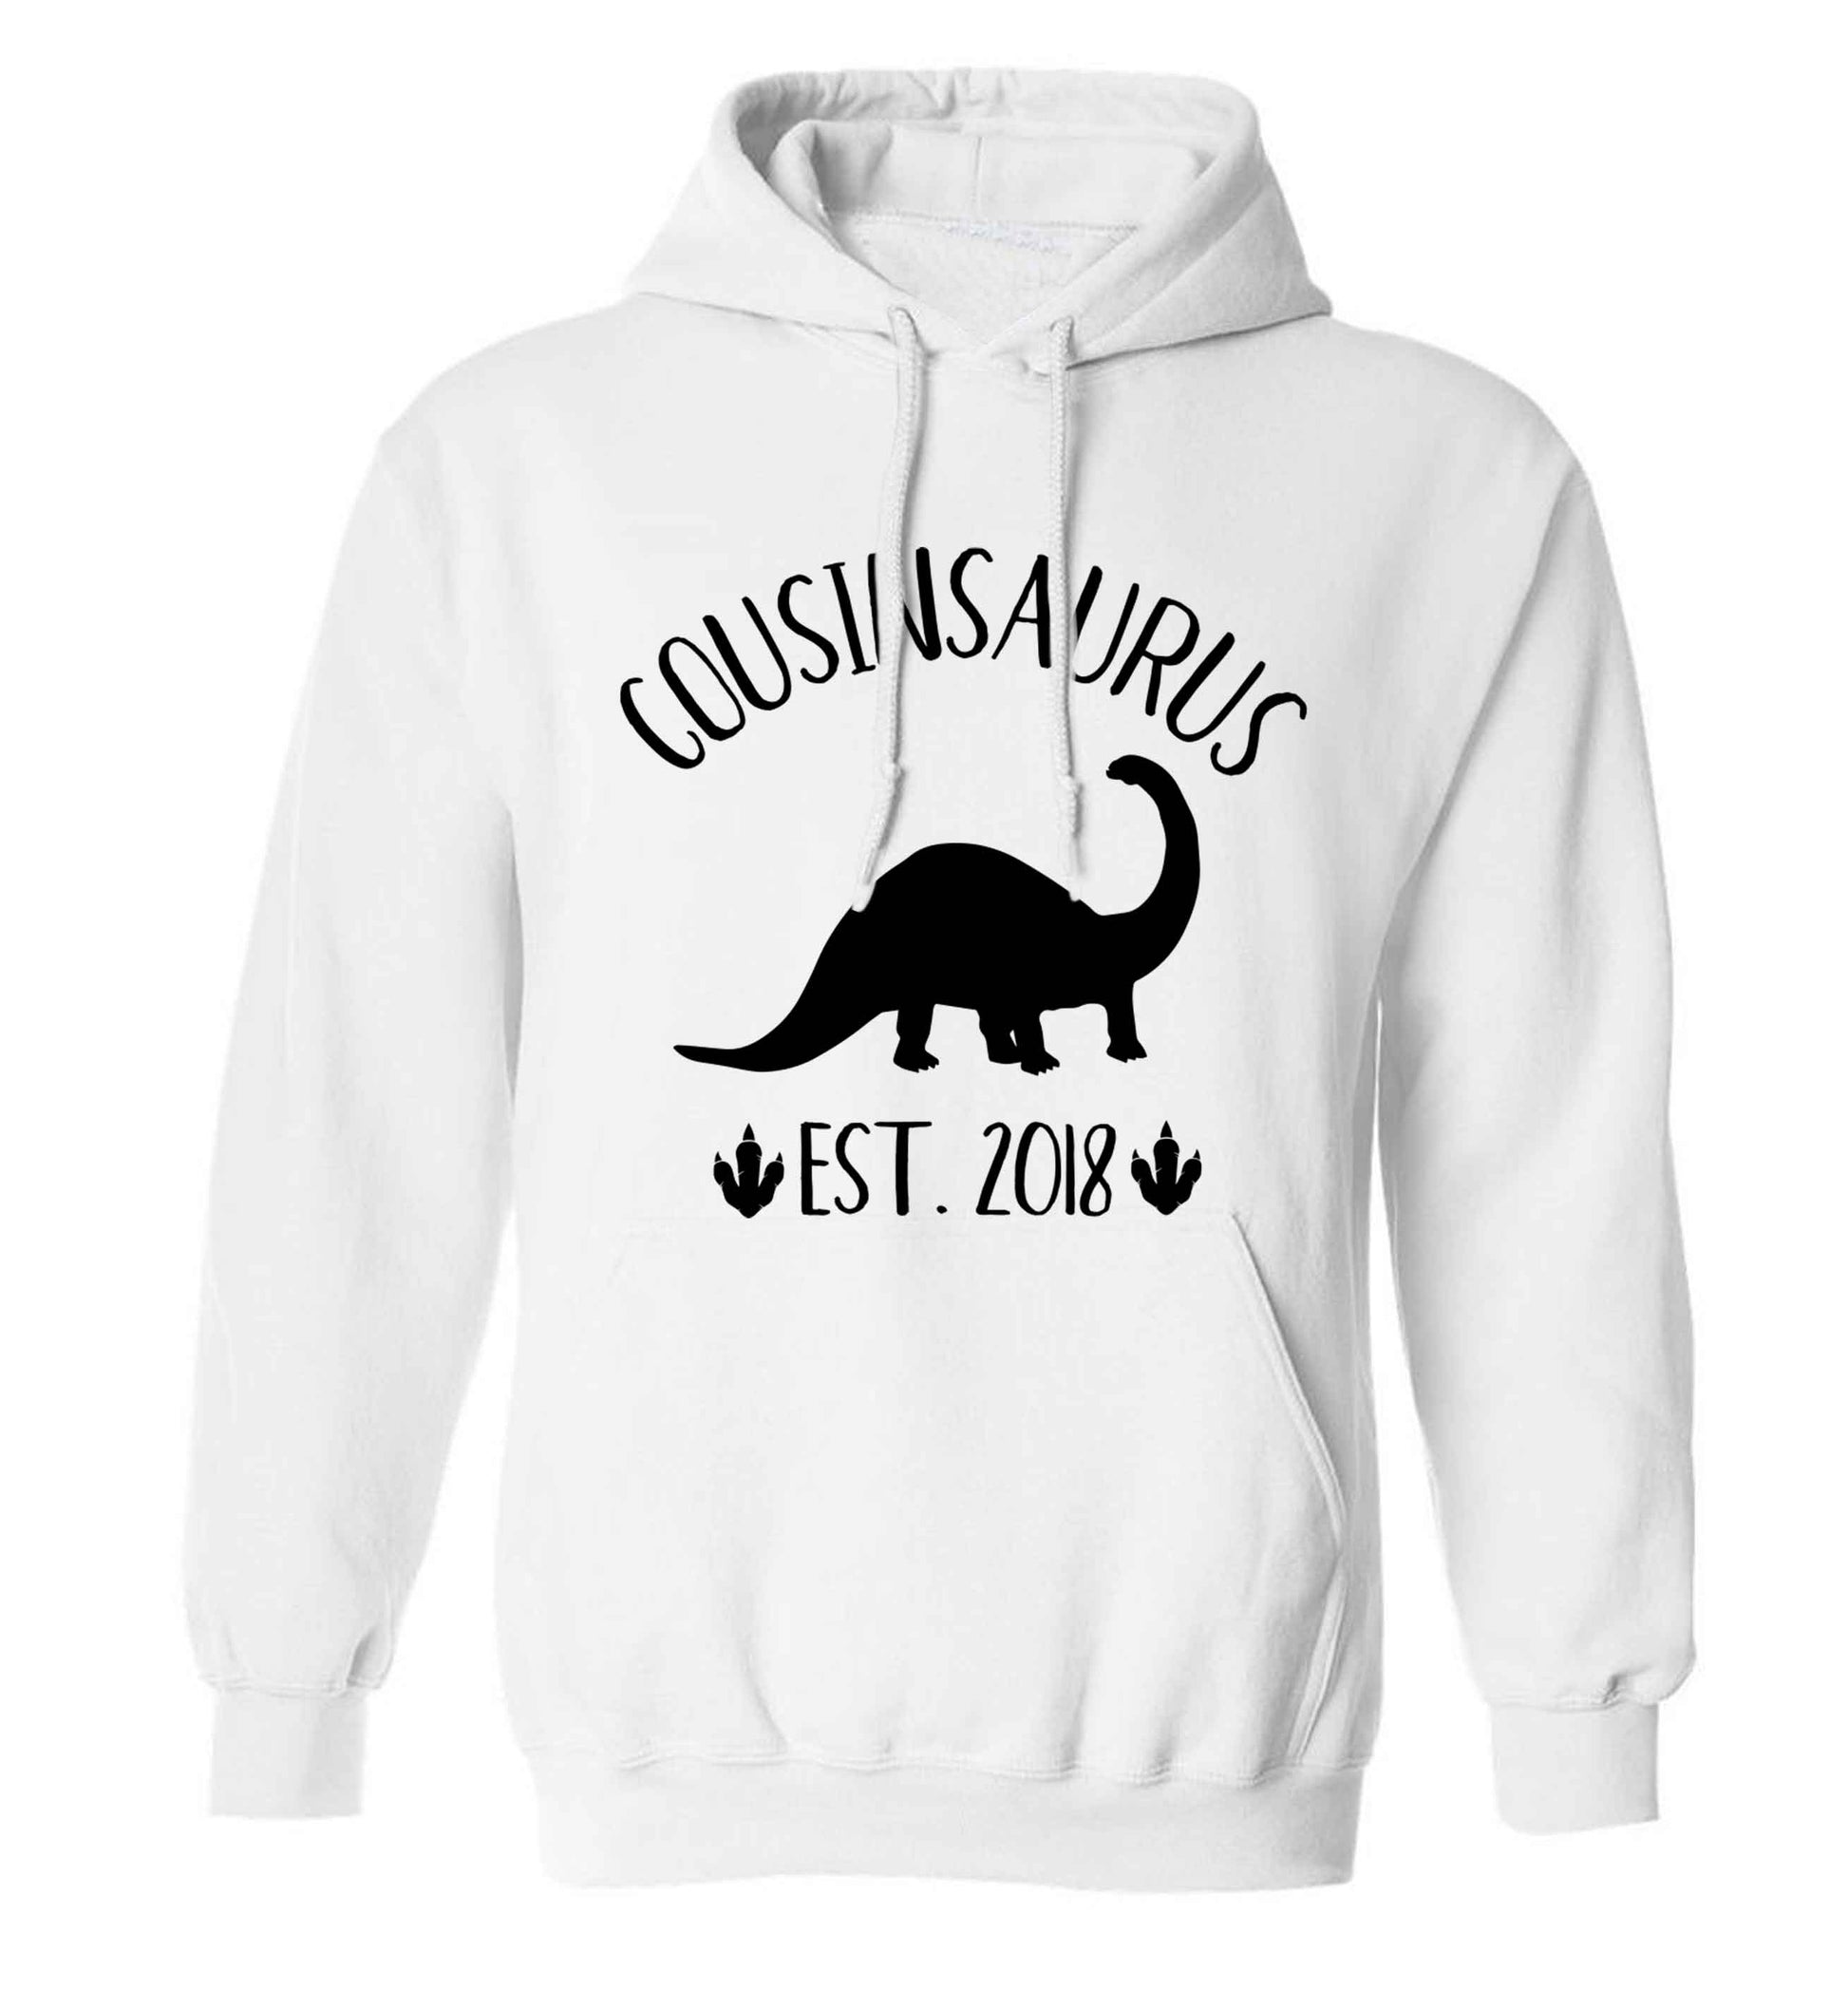 Personalised cousinsaurus since (custom date) adults unisex white hoodie 2XL